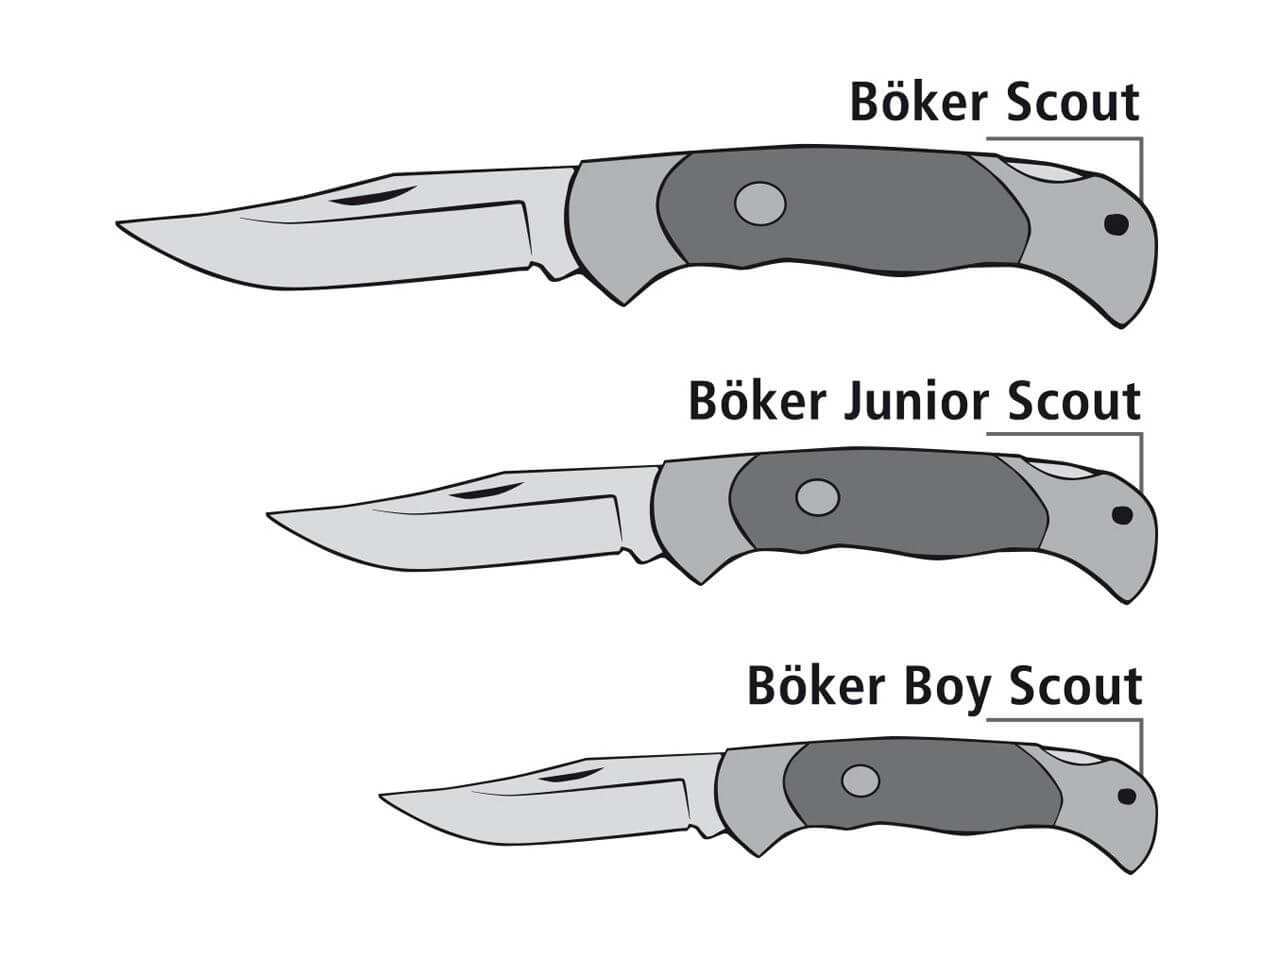 Boker Scout (Camp) Knife